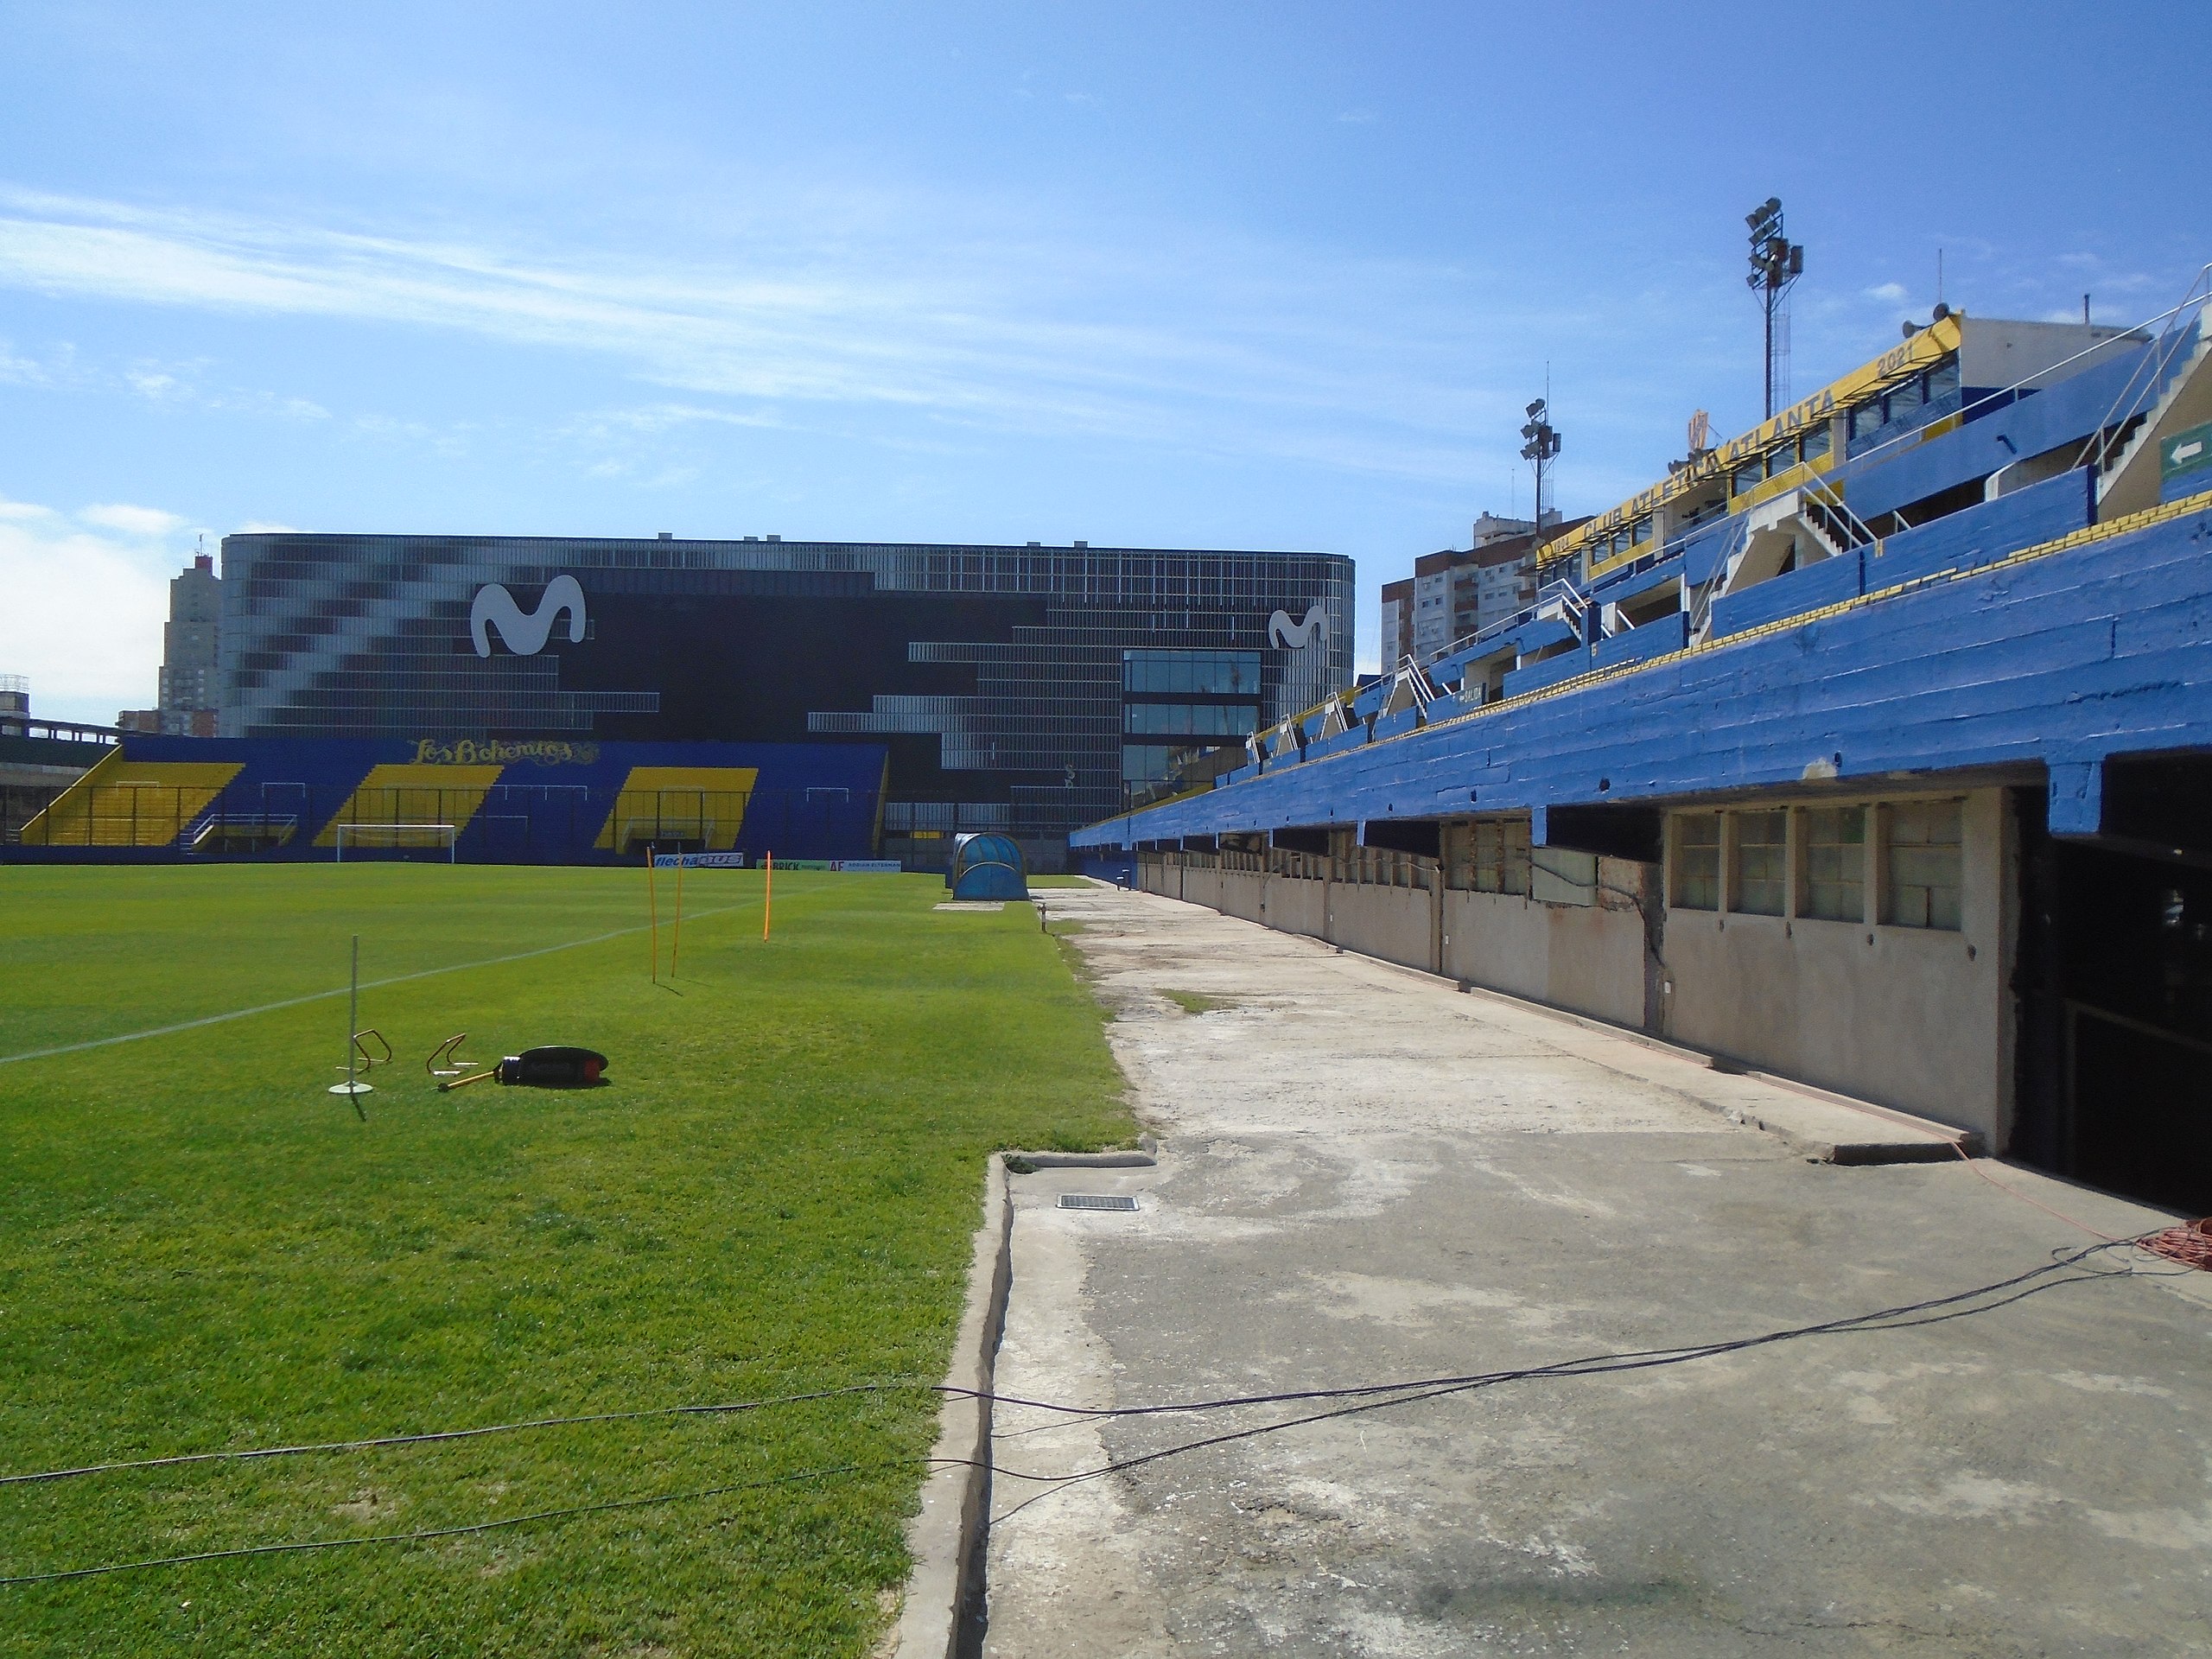 Estadio Don León Kolbovski - Wikipedia